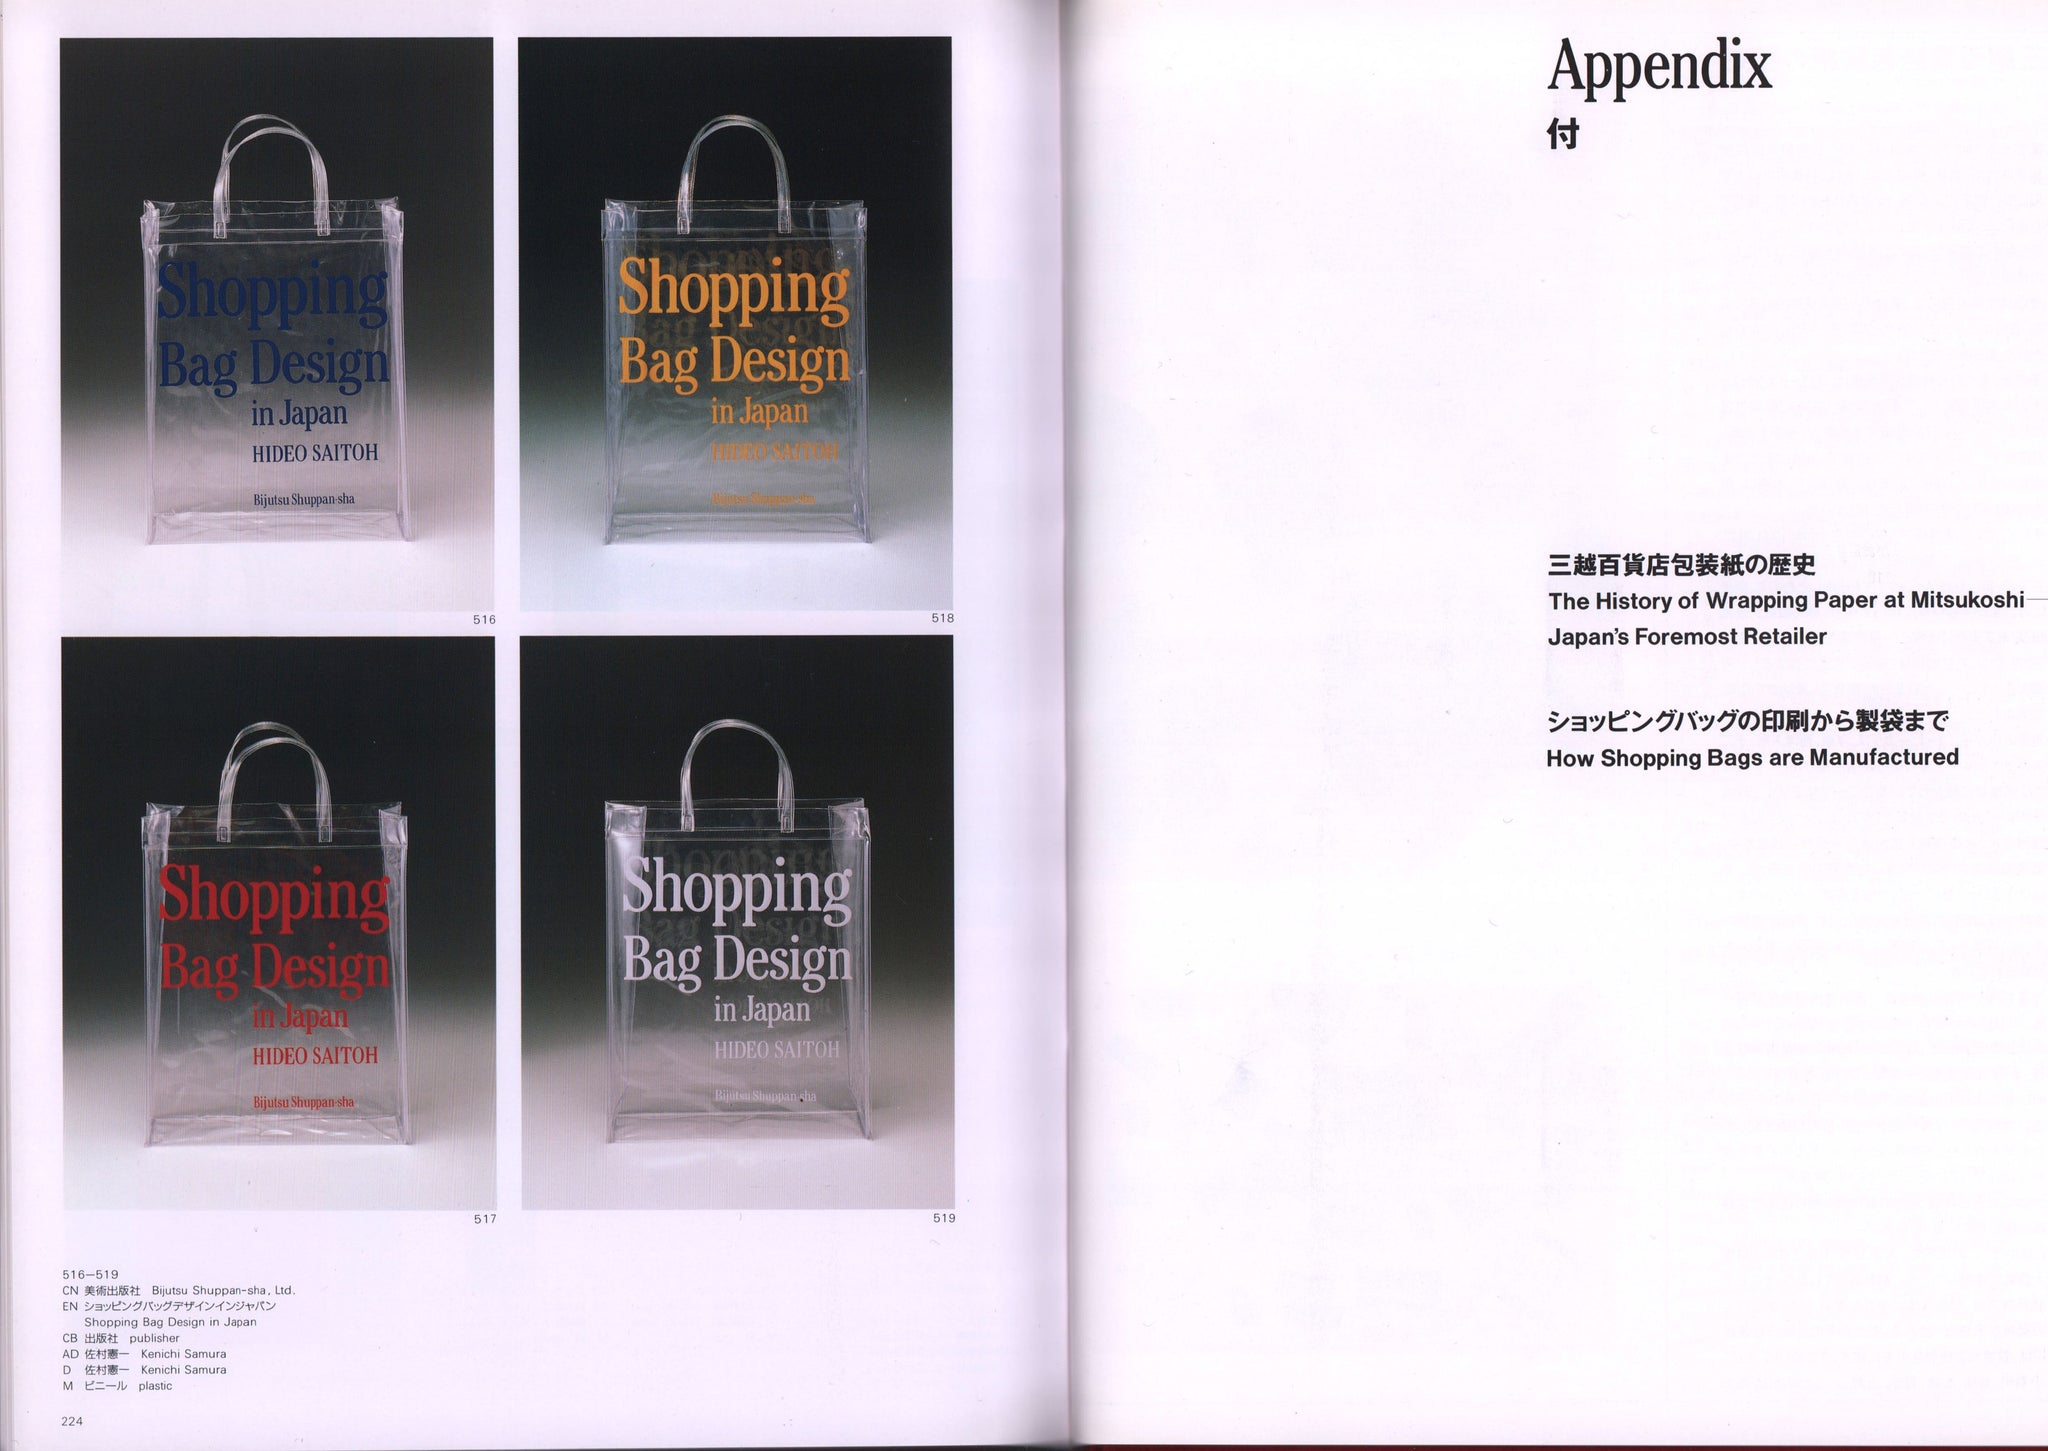 Shopping Bag Design in Japan [Hideo Saitoh 1988]